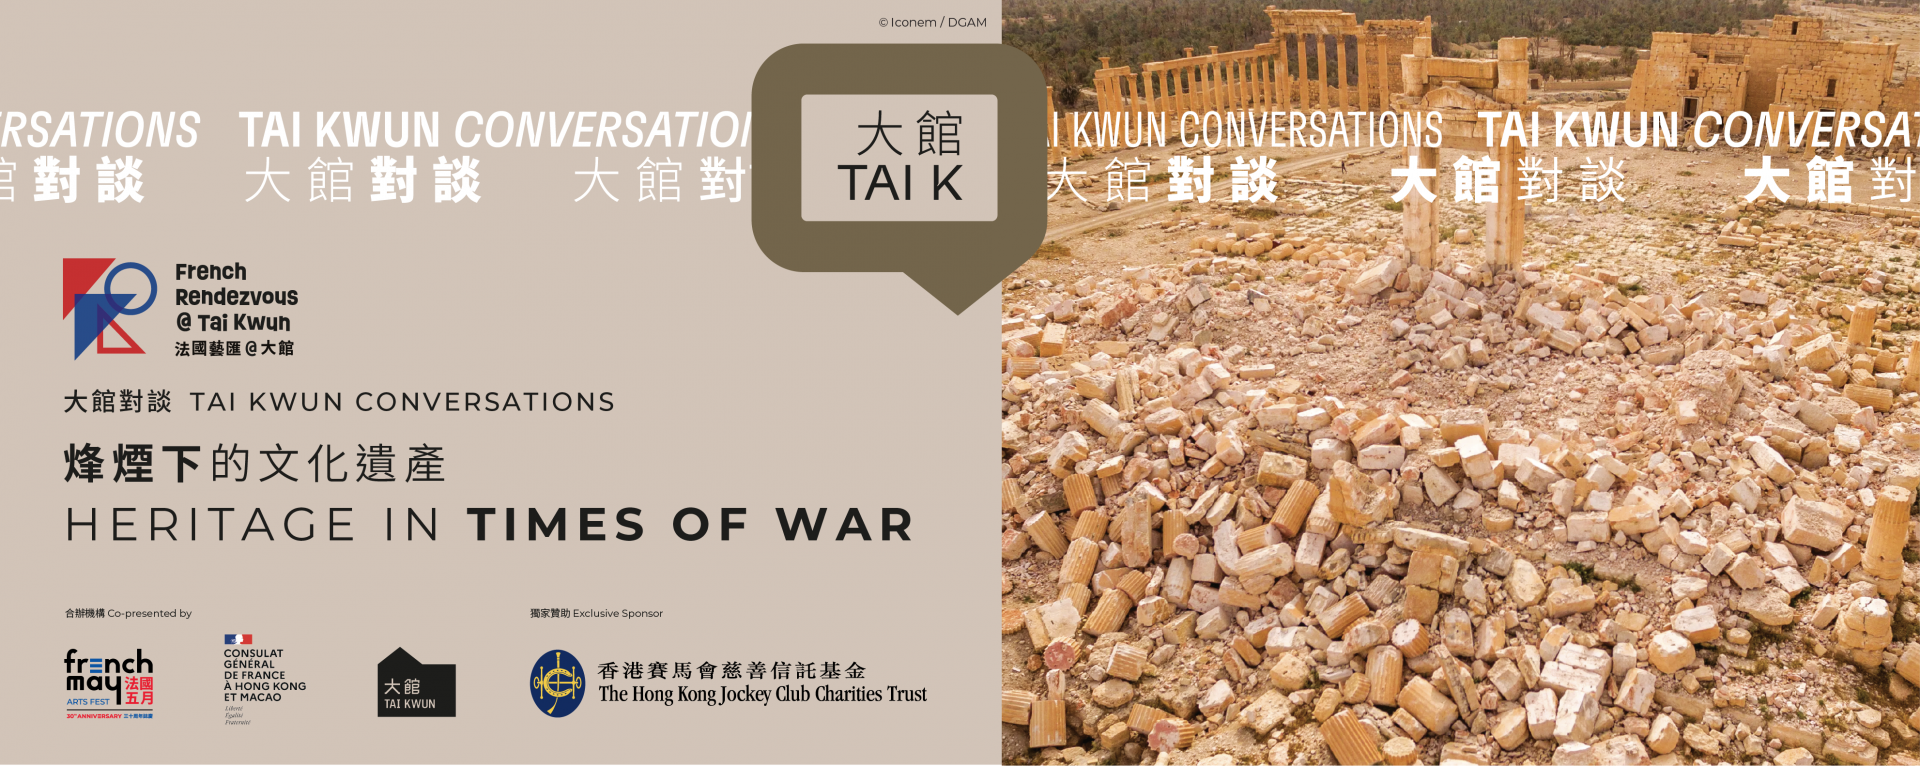 French Rendezvous@Tai Kwun: TAI KWUN CONVERSATIONS - HERITAGE IN TIMES OF WAR